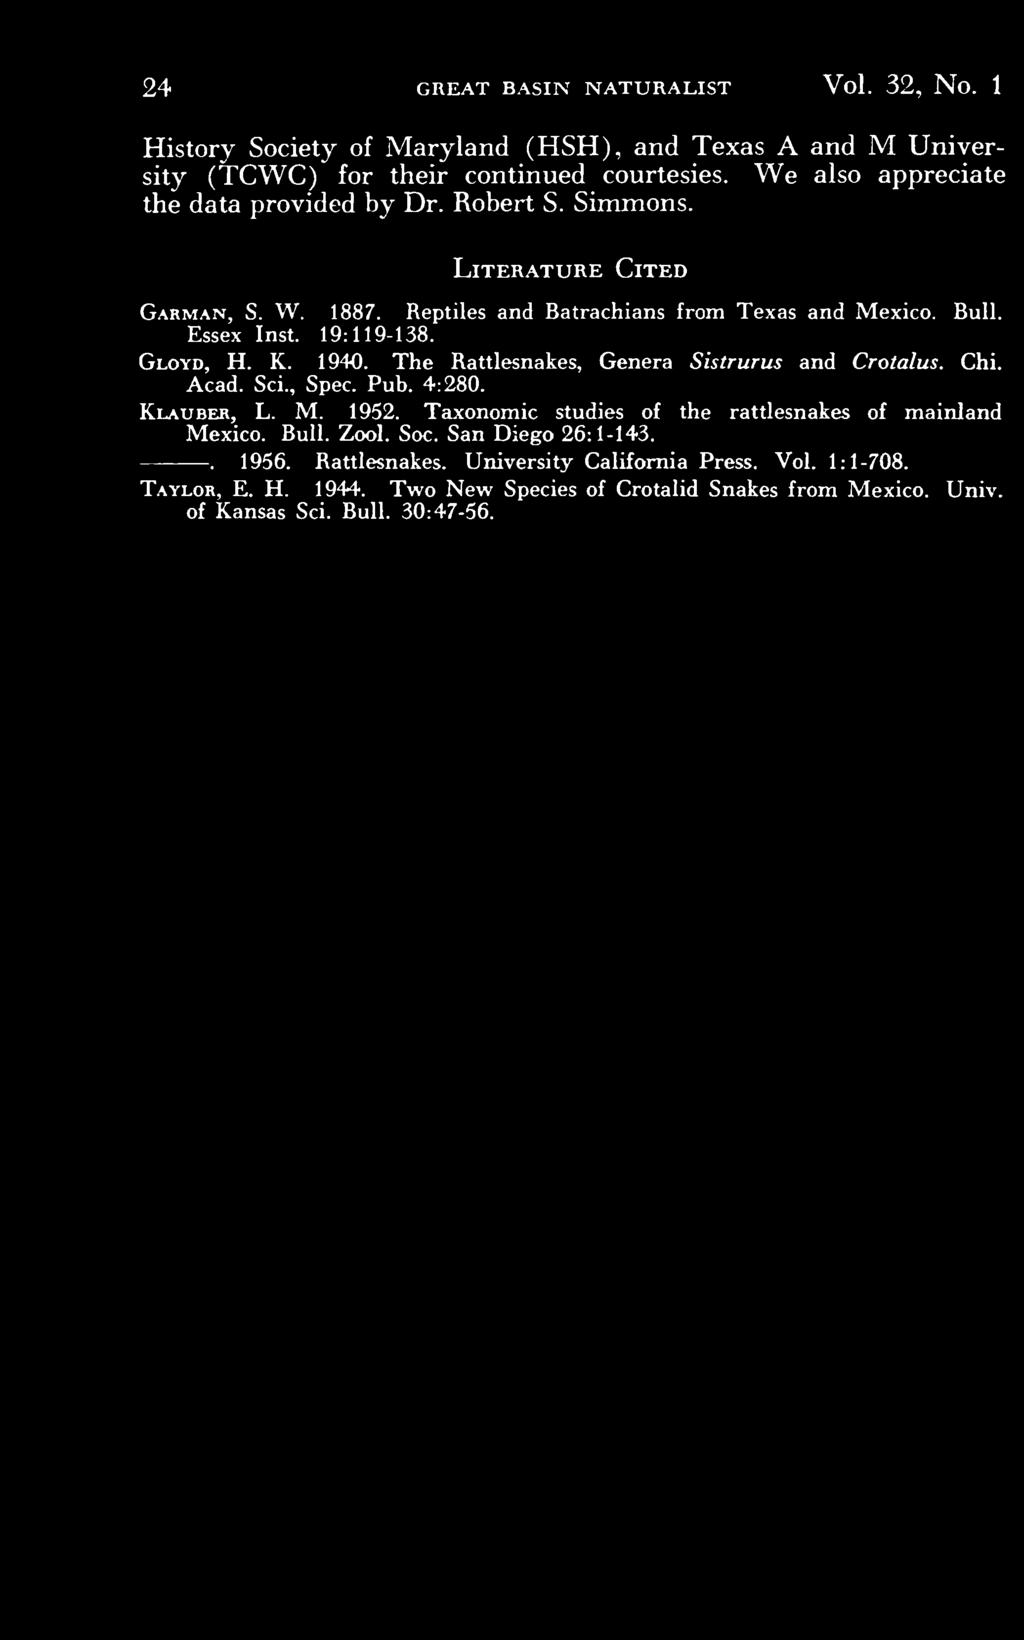 Gloyd, H. K. 1940. The Rattlesnakes, Genera Sistrurus and Crotalus. Chi. Acad. Sci., Spec. Pub. 4:280. Klauber, L. M. 1952.